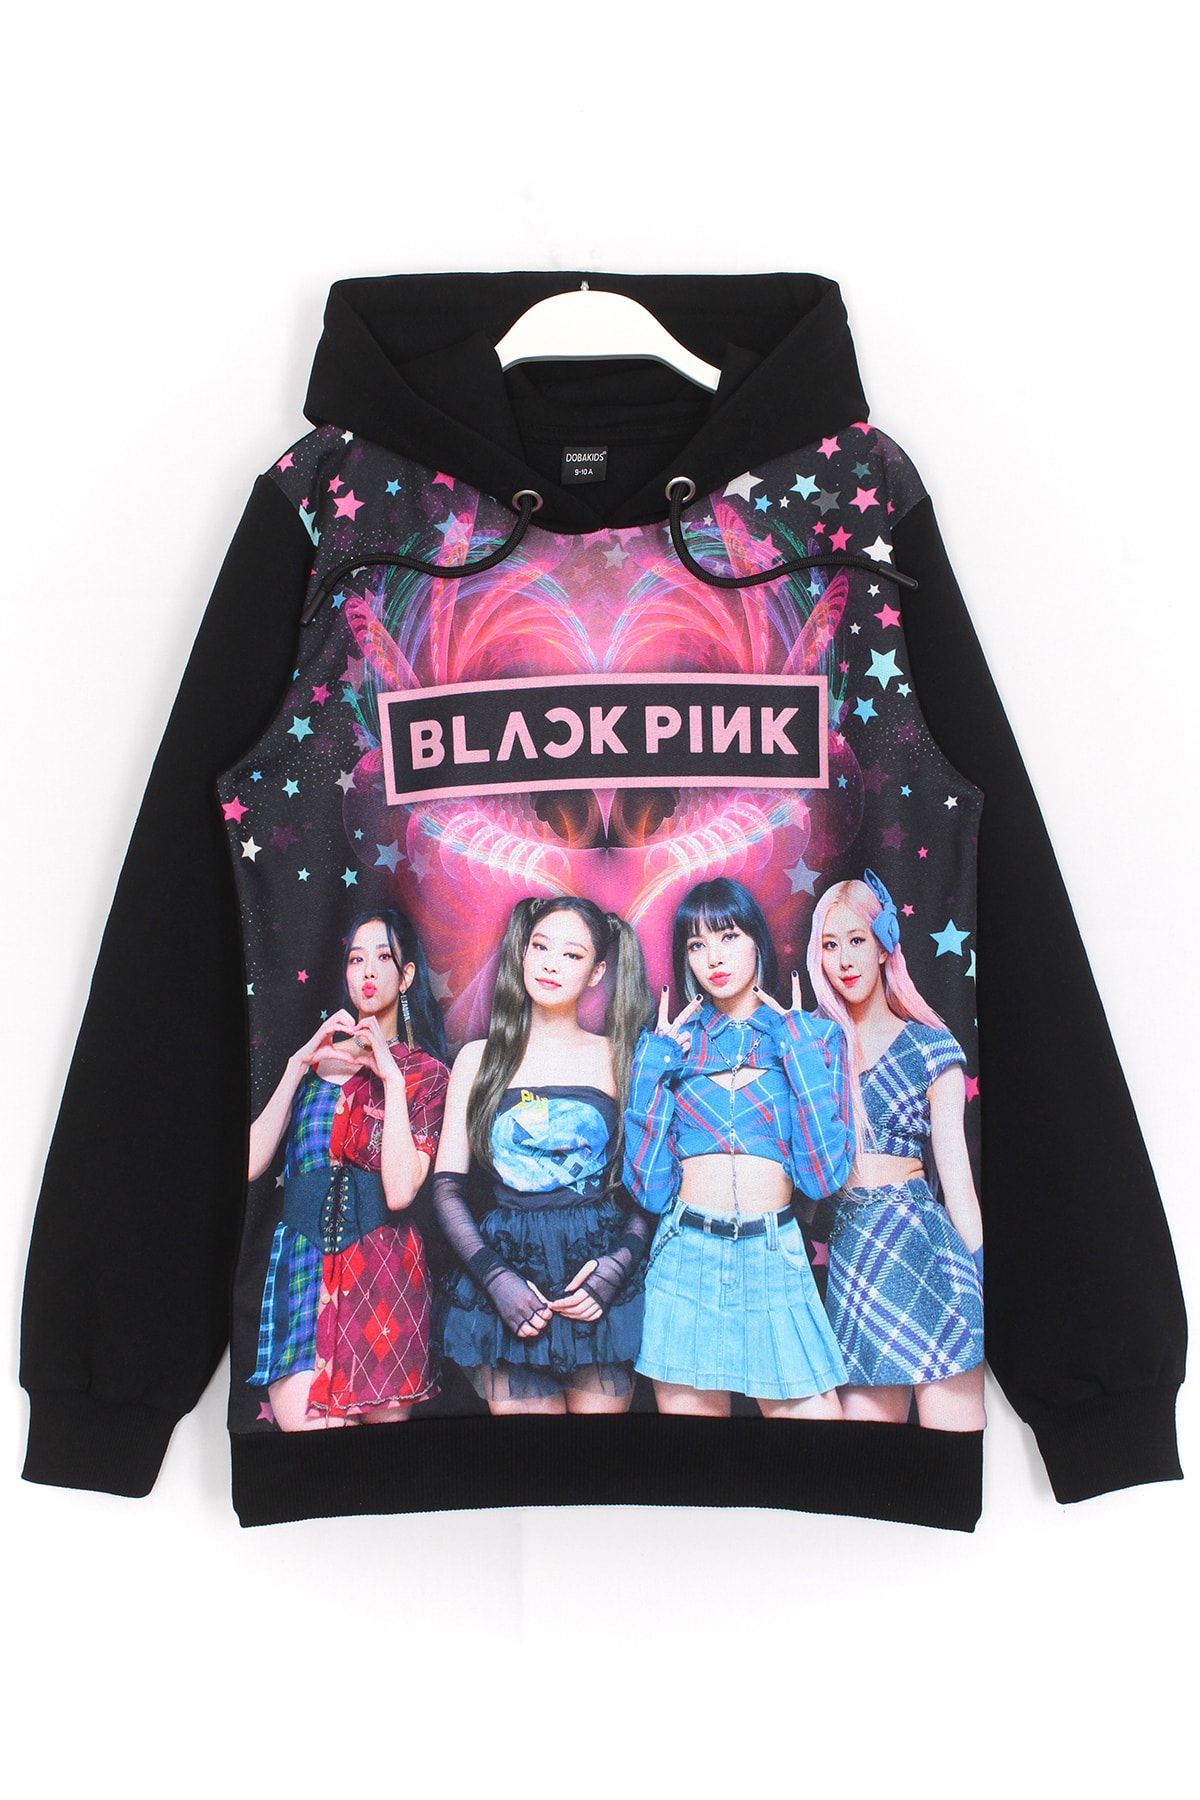 DobaKids Blackpink Korean Pop Grup Dijital Baskı Kız Çocuk Siyah Renk Kapüşonlu Sweatshirt Hoodie